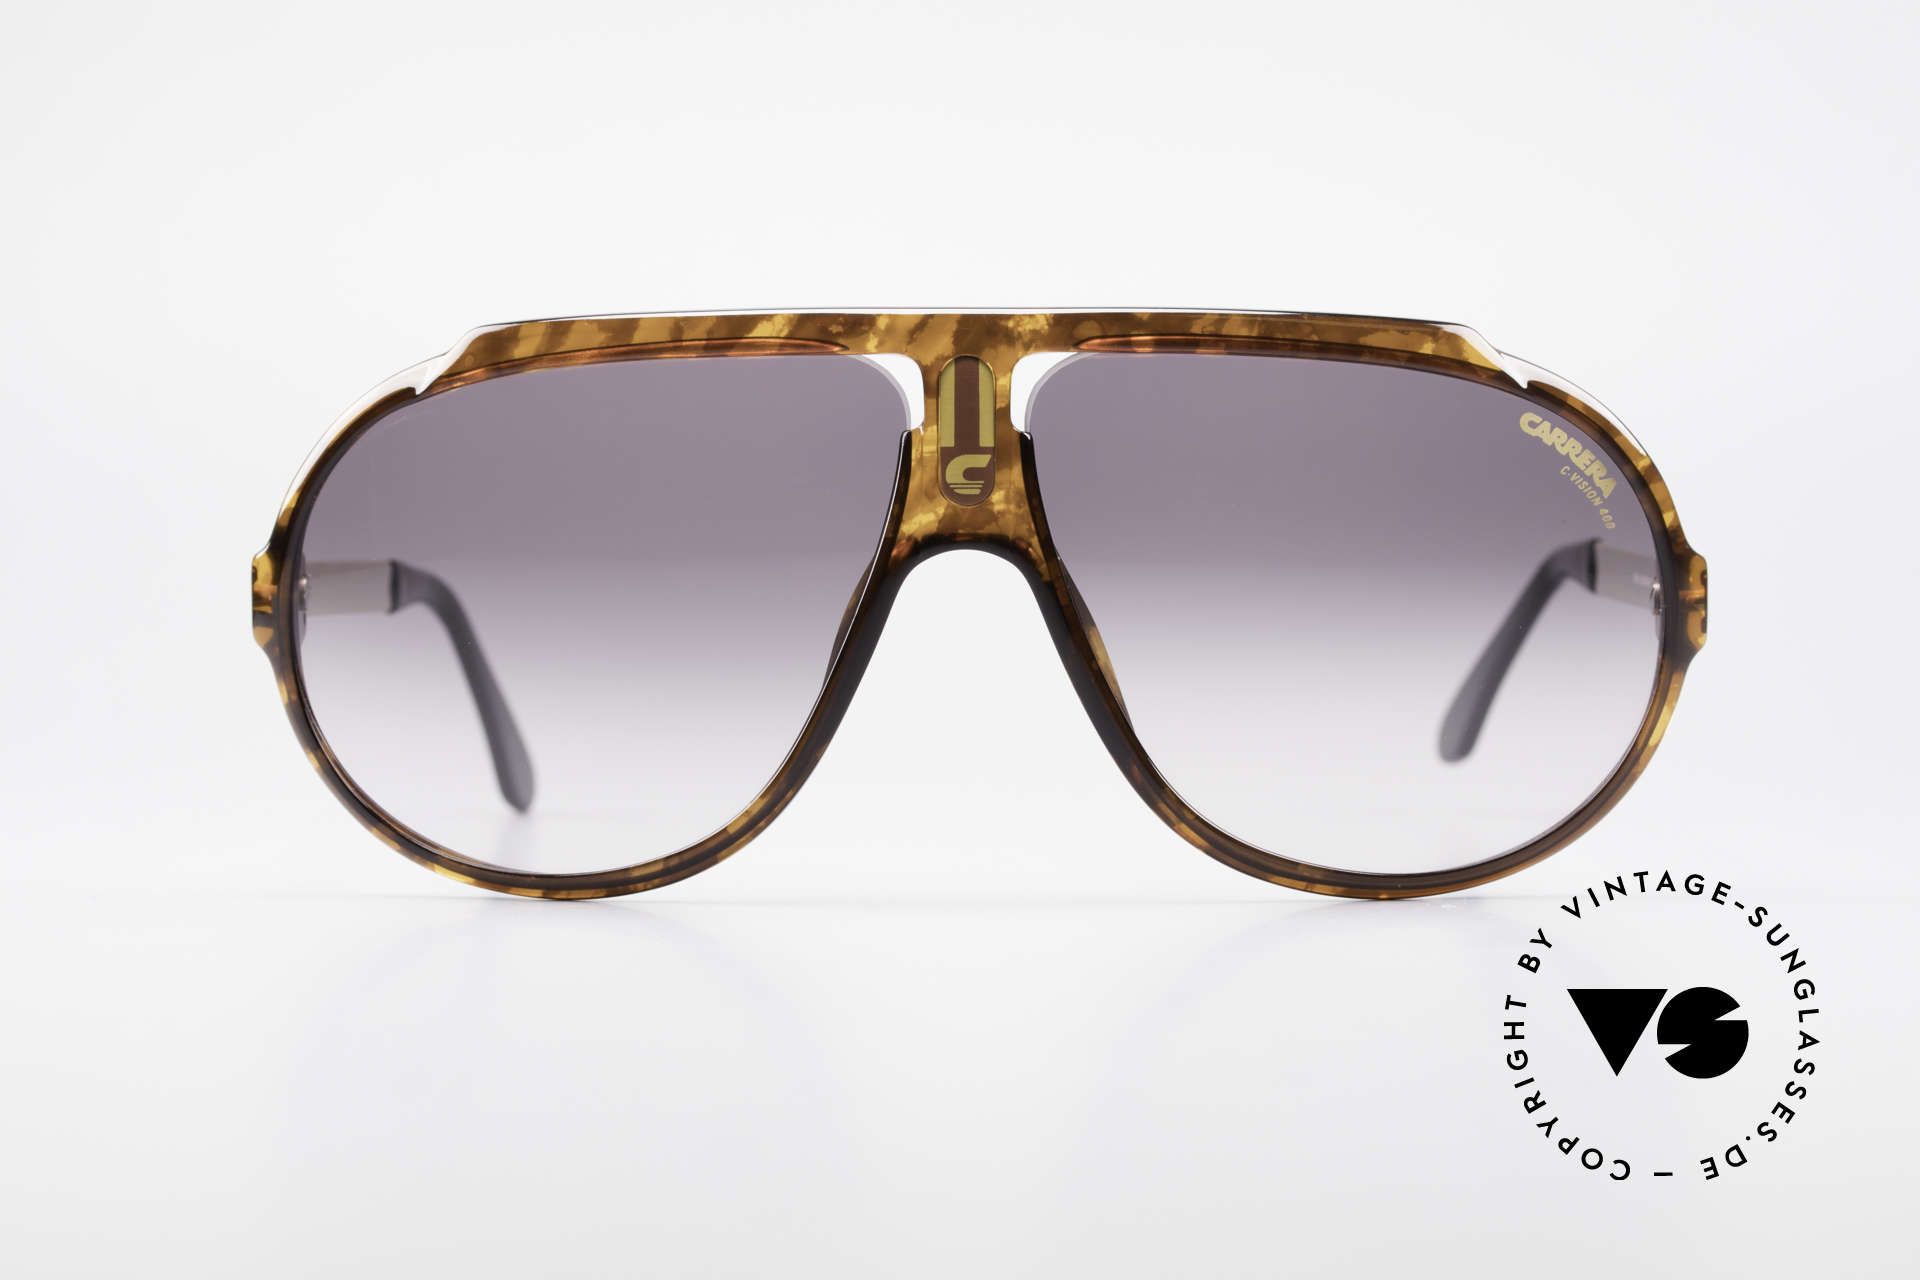 Sonnenbrillen Carrera 5512 80er Miami Vice Sonnenbrille Vintage Sunglasses 